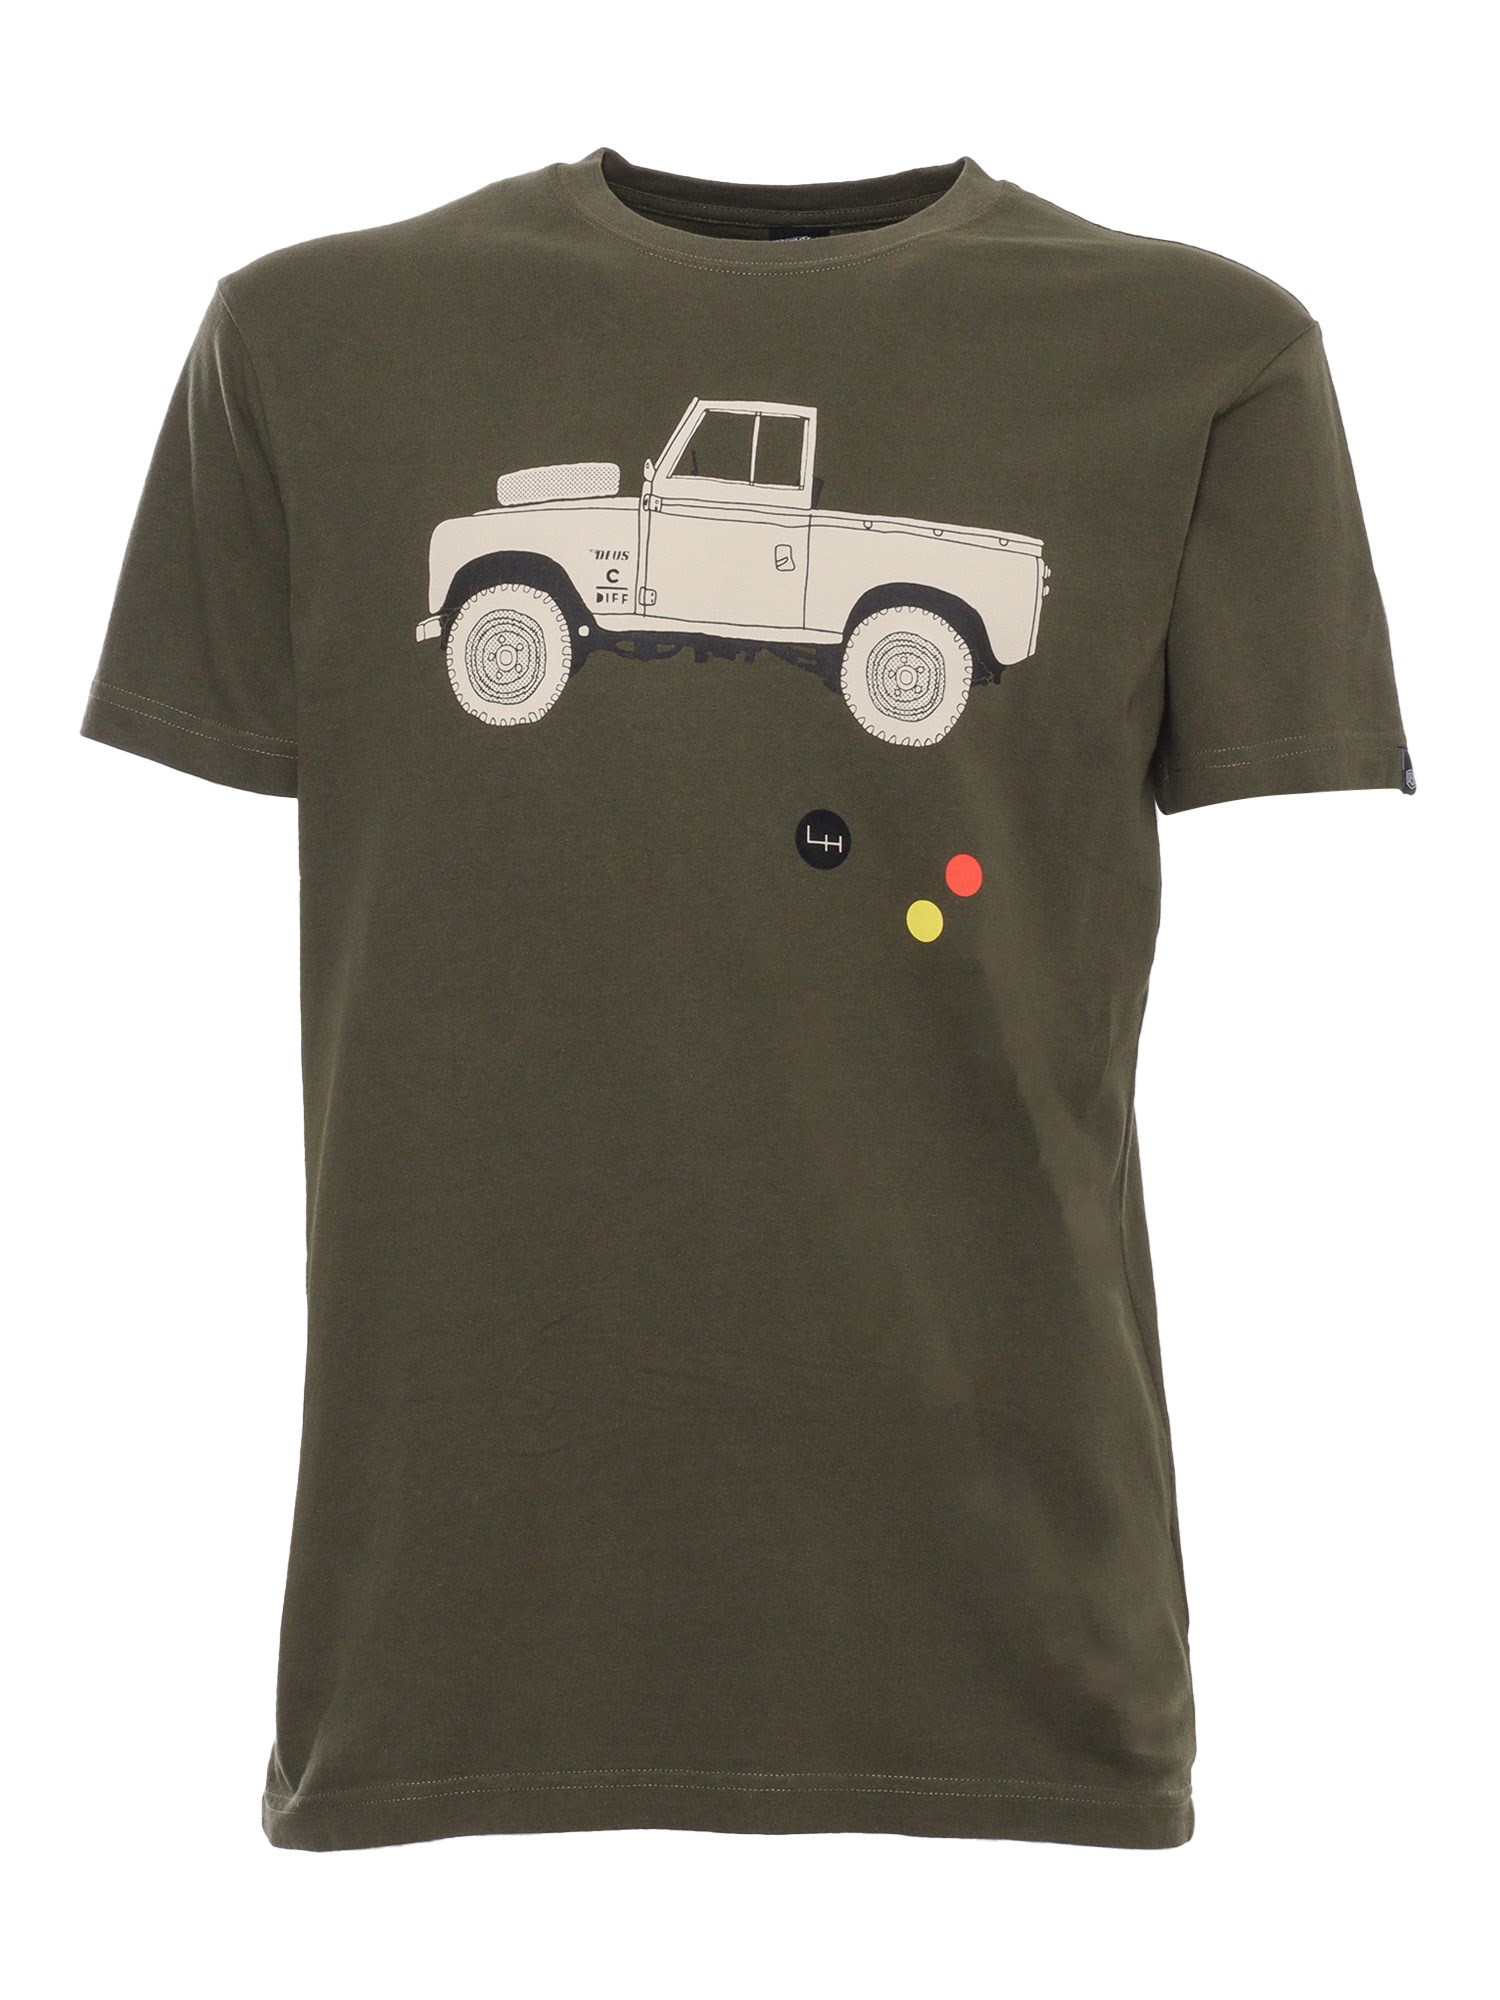 Deus Ex Machina Military Green T-shirt